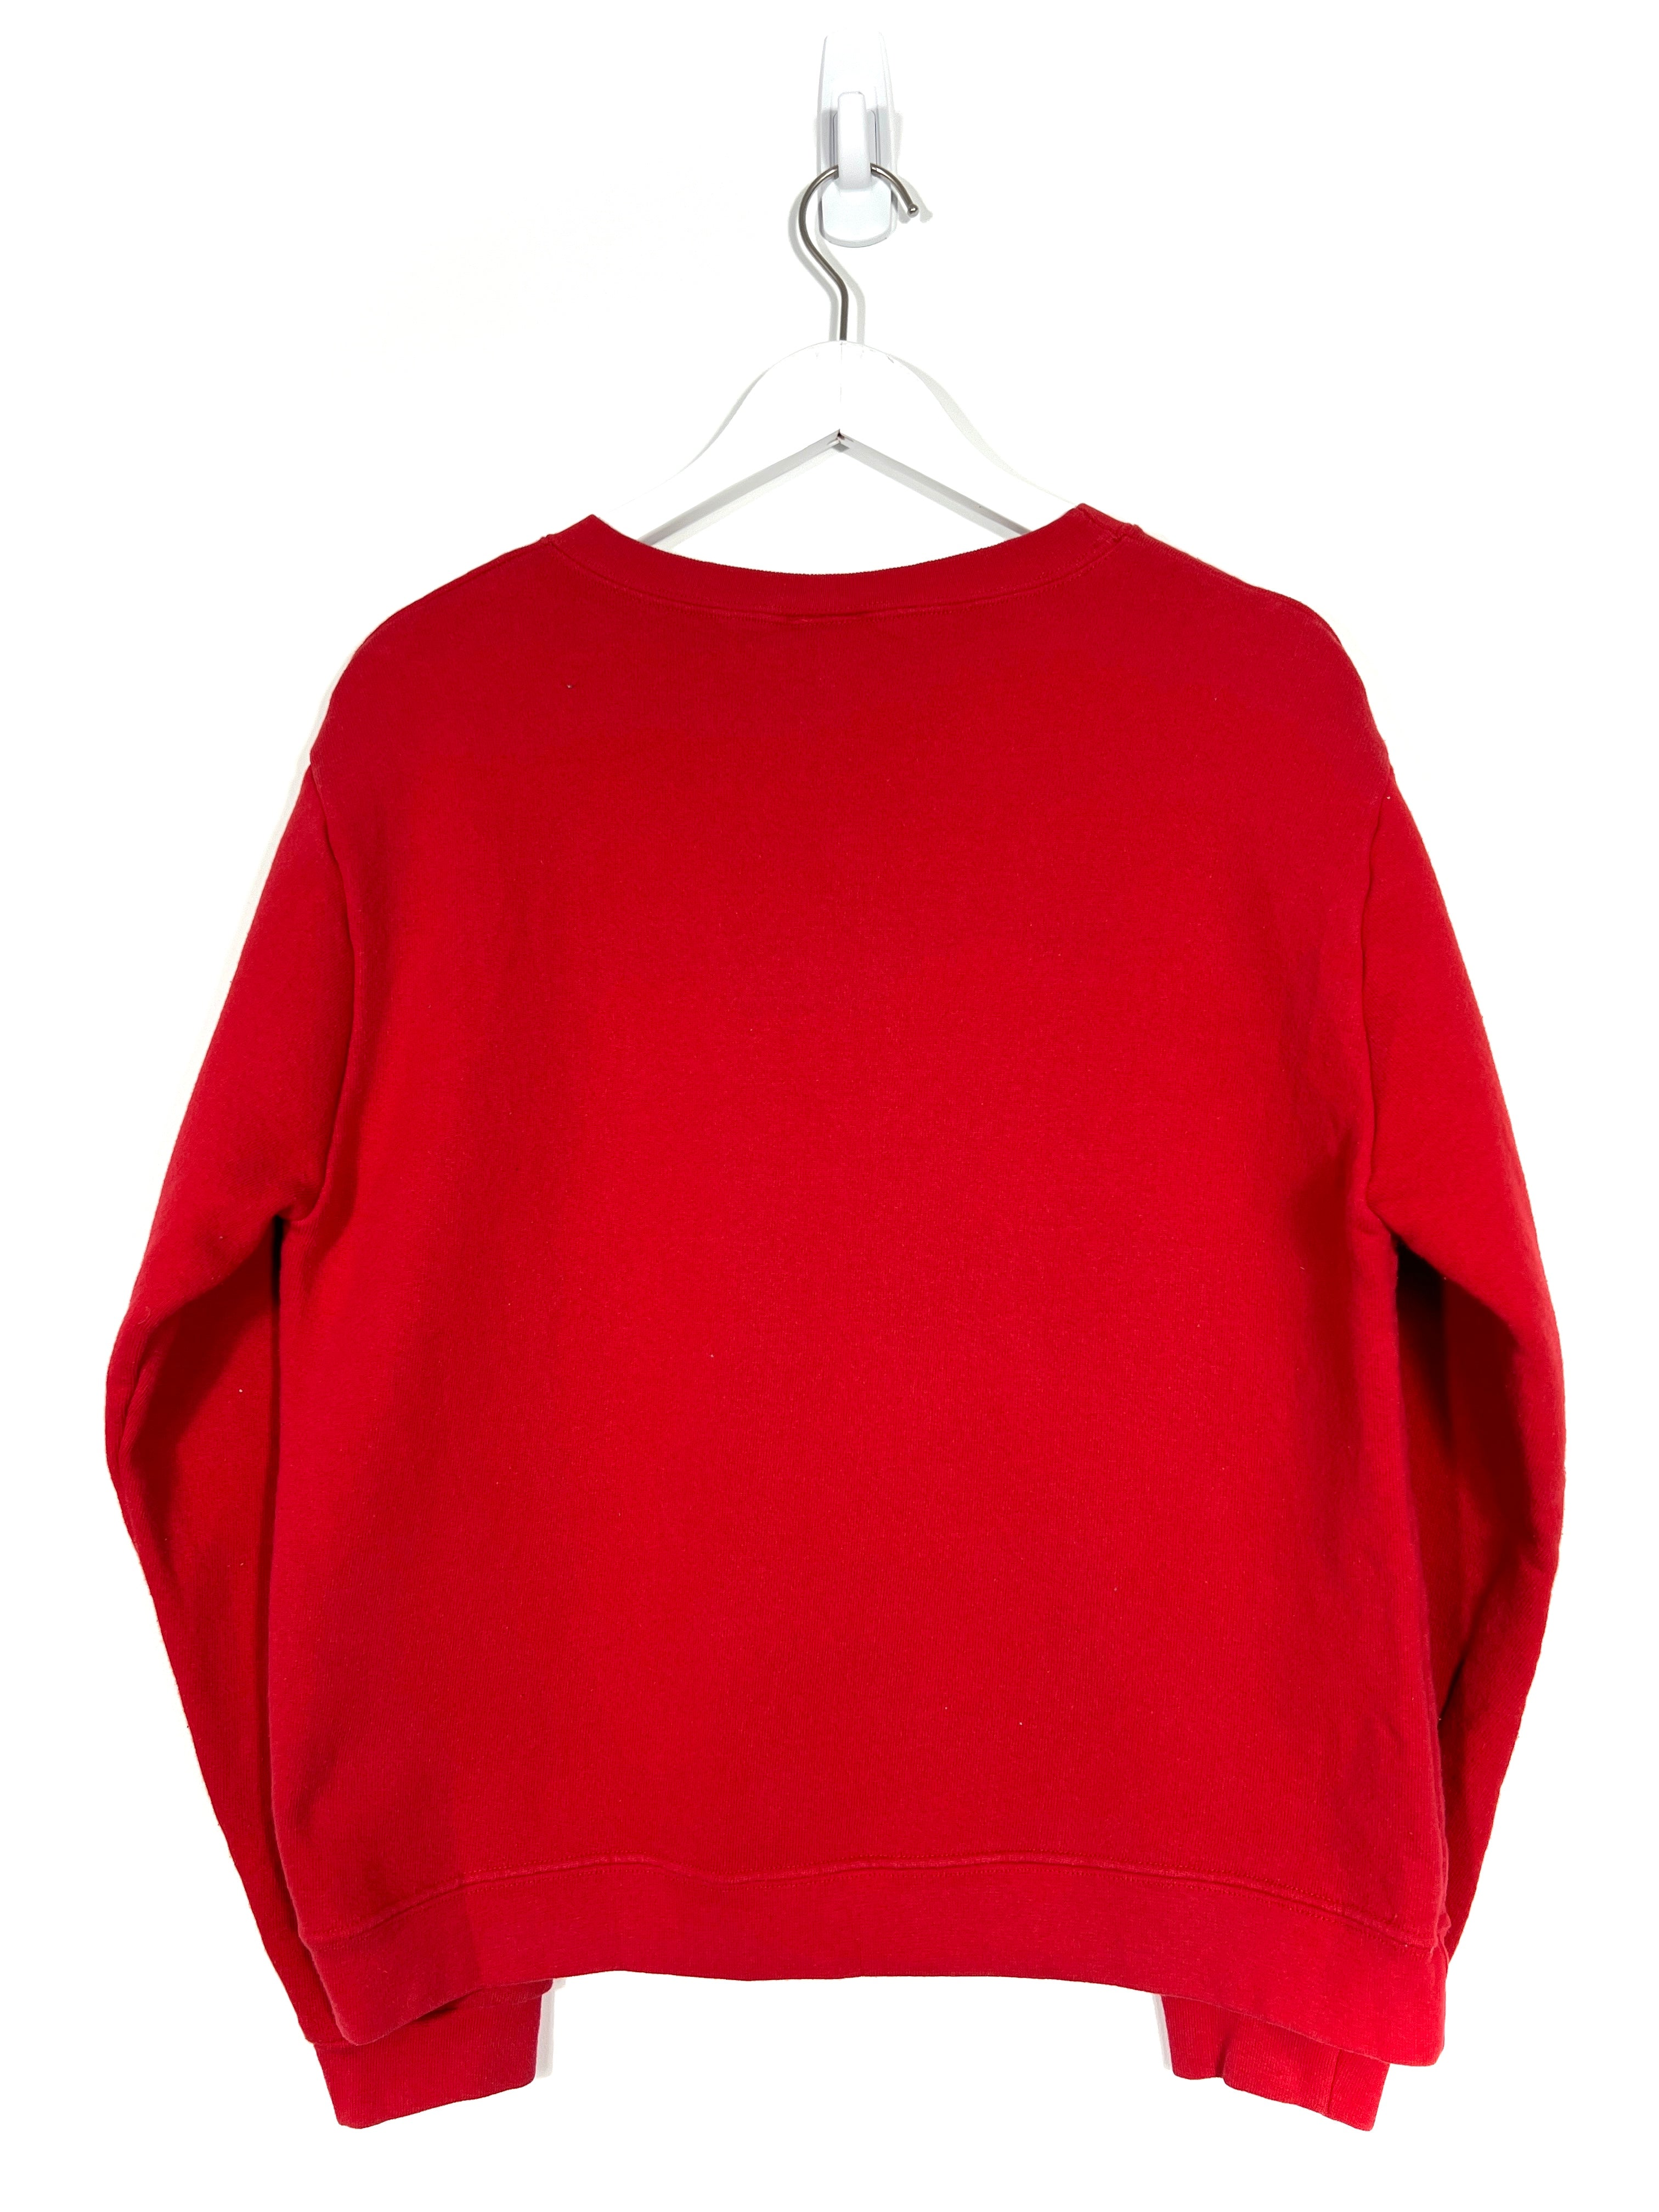 Vintage Tommy Hilfiger Crewneck Sweatshirt - Women's Large